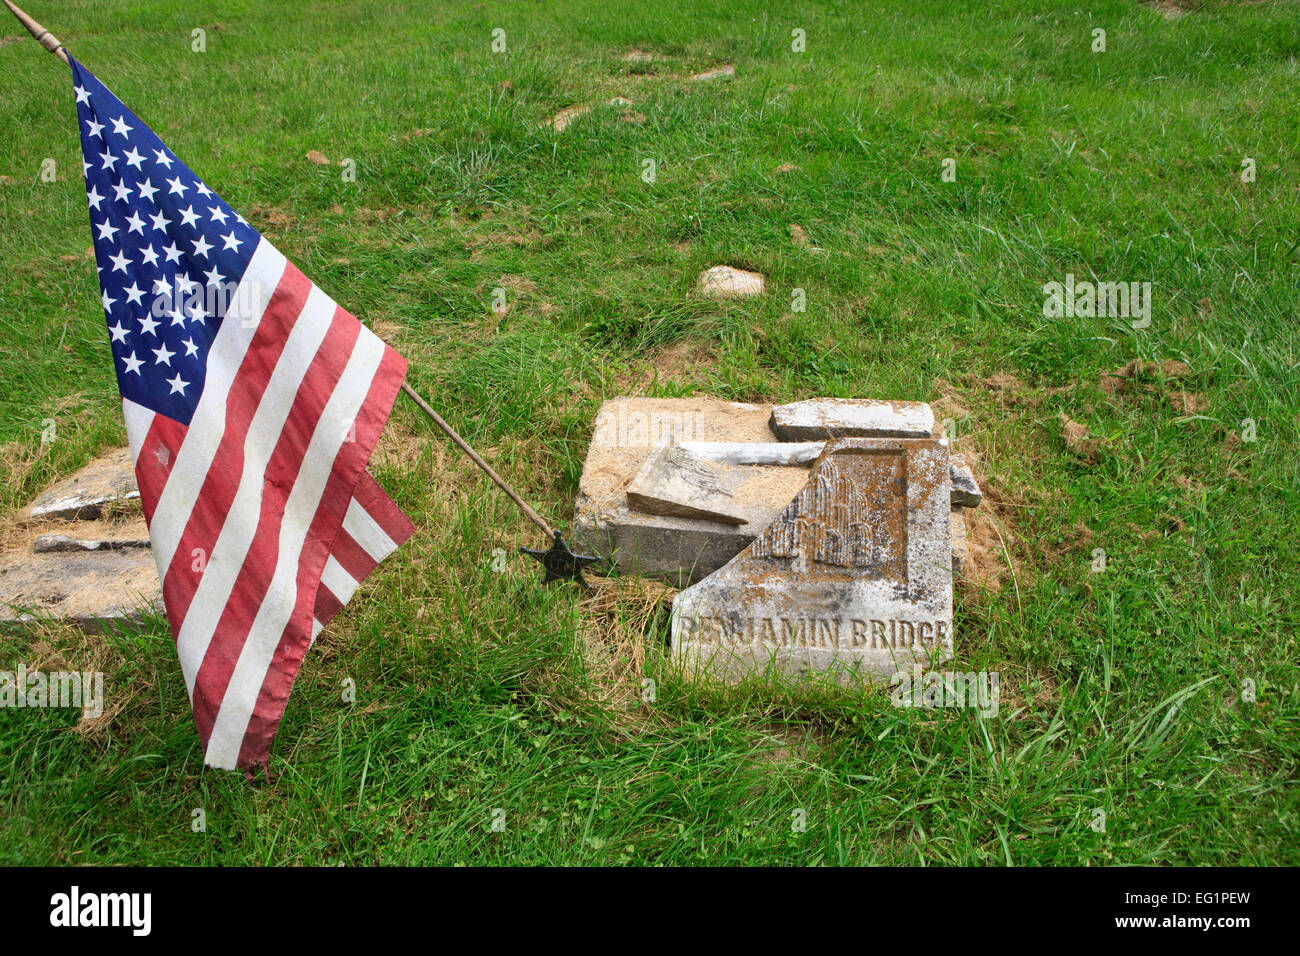 American flag on the grave marker of an American Revolutionary war veteran (Benjamin Bridge) Stock Photo